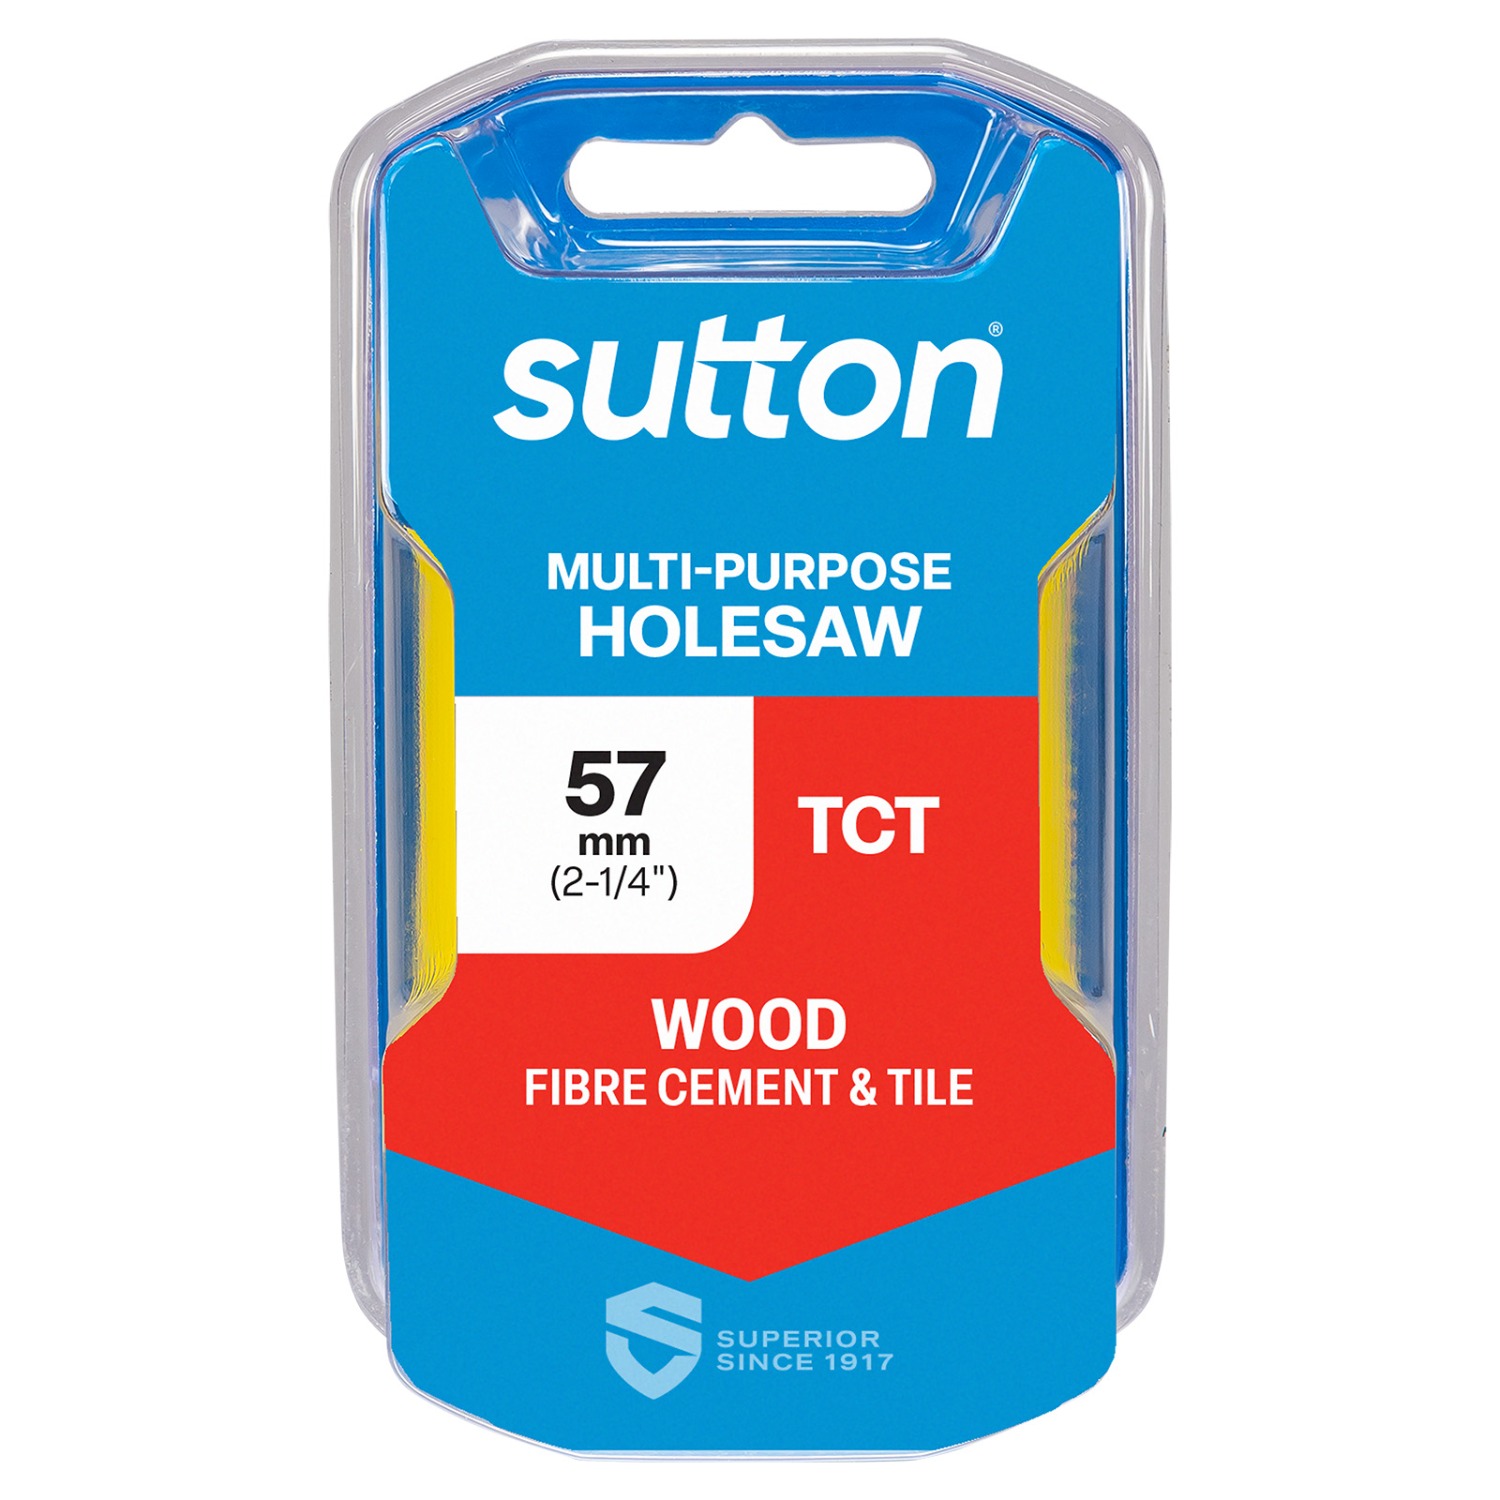 SUTTON 20mm TCT MULTI-PURPOSE HOLESAW FOR WOOD FIBRE CEMENT ETC 